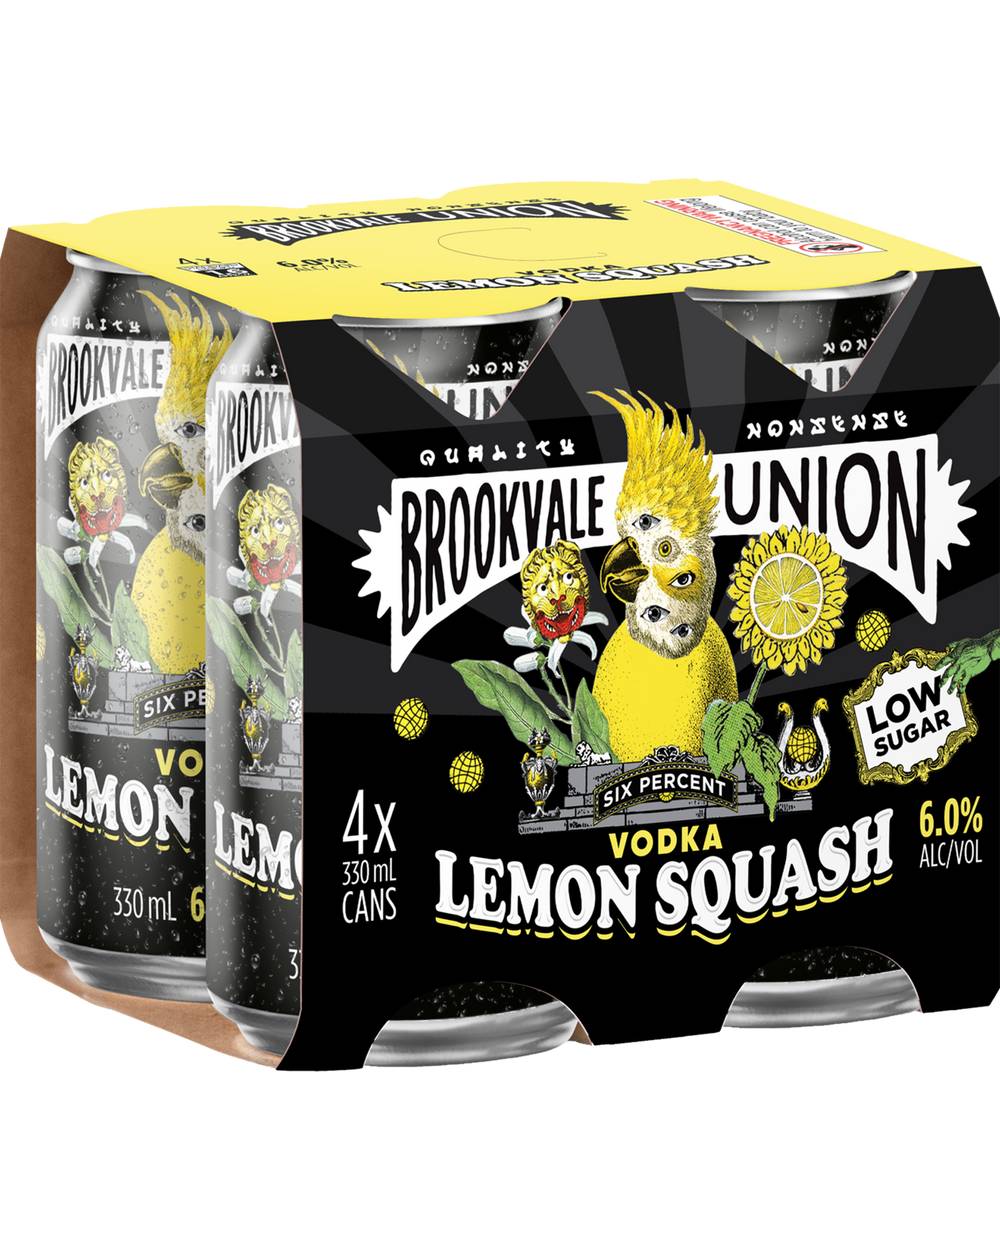 Brookvale Union Lemon Squash 4x330ml